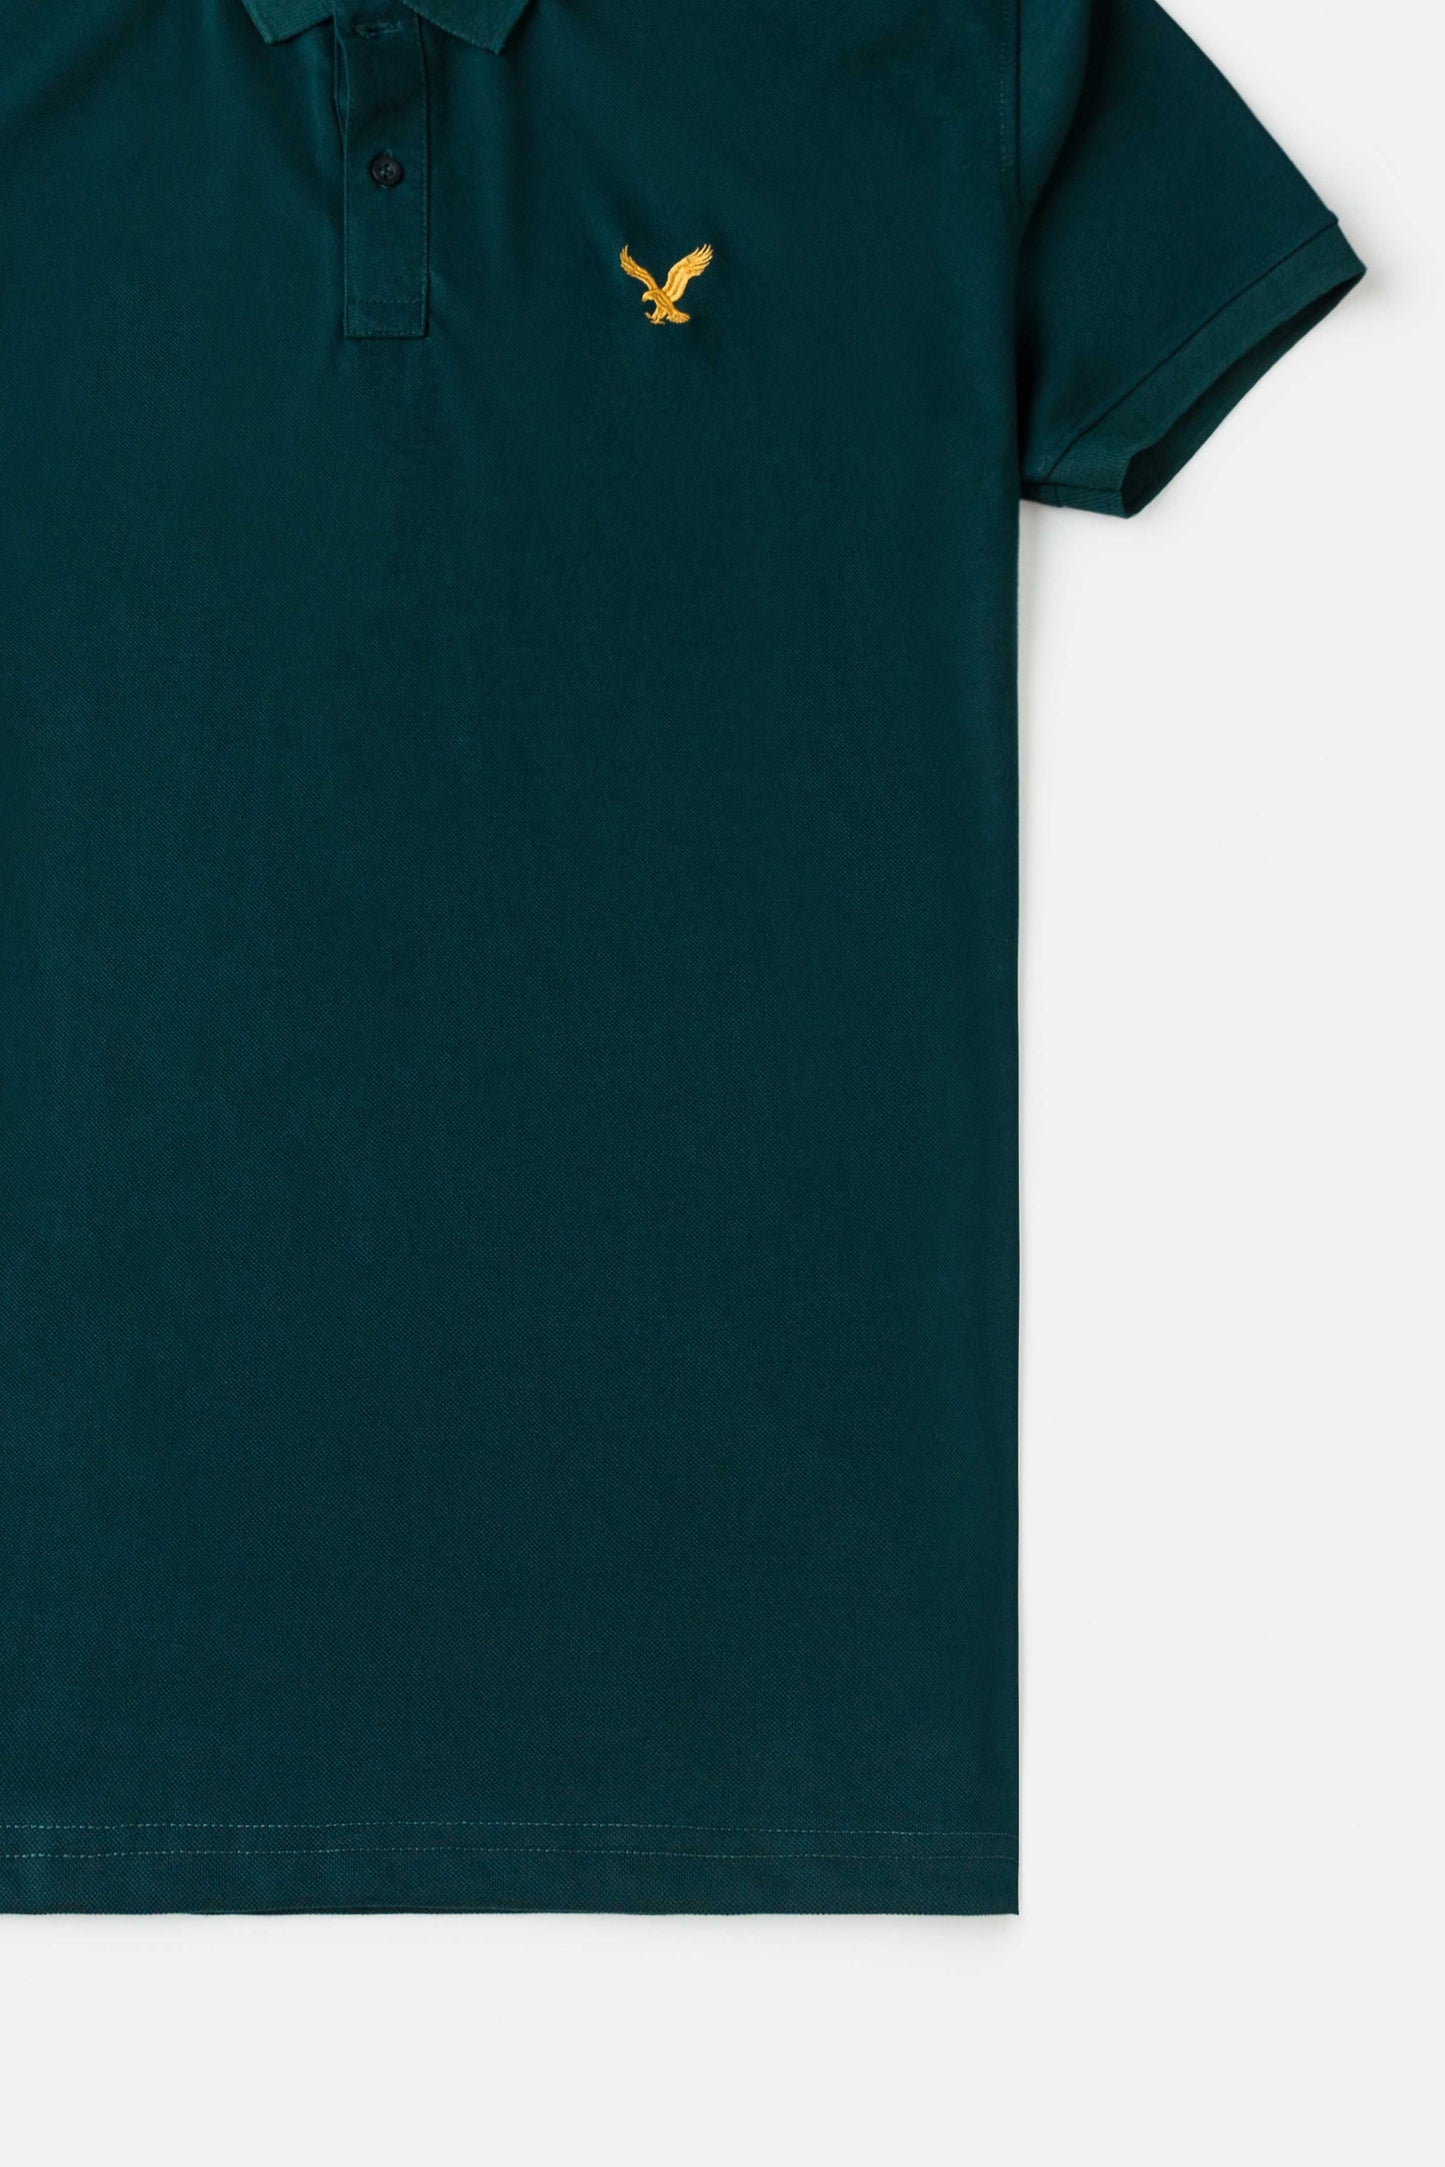 AE Premium Imported Pique Polo shirt – Green